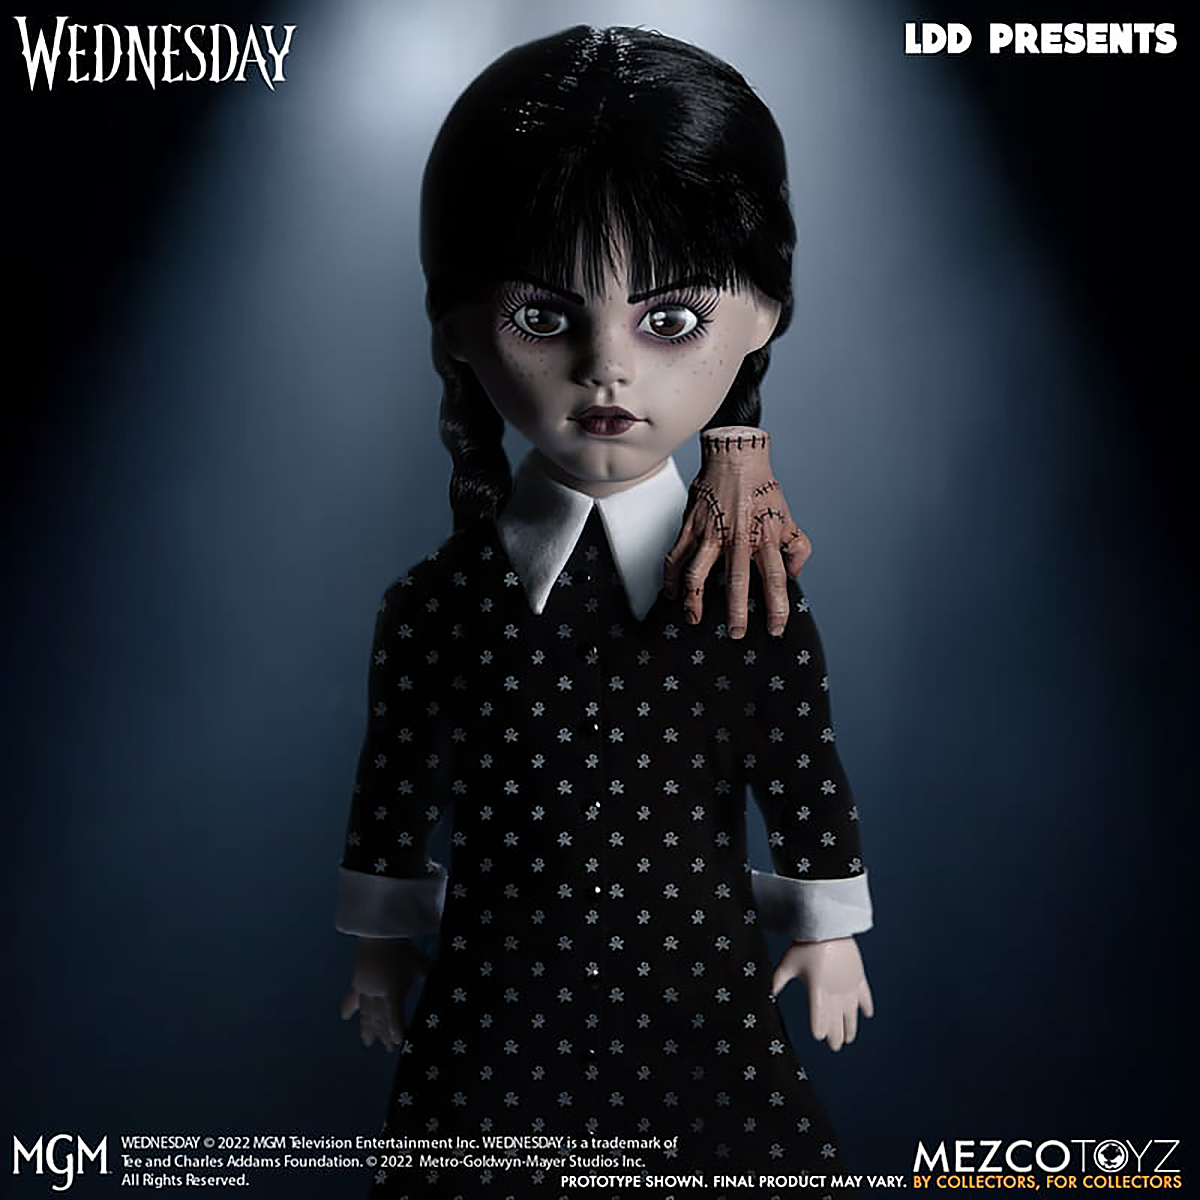 LDD presents Wednesday Puppe